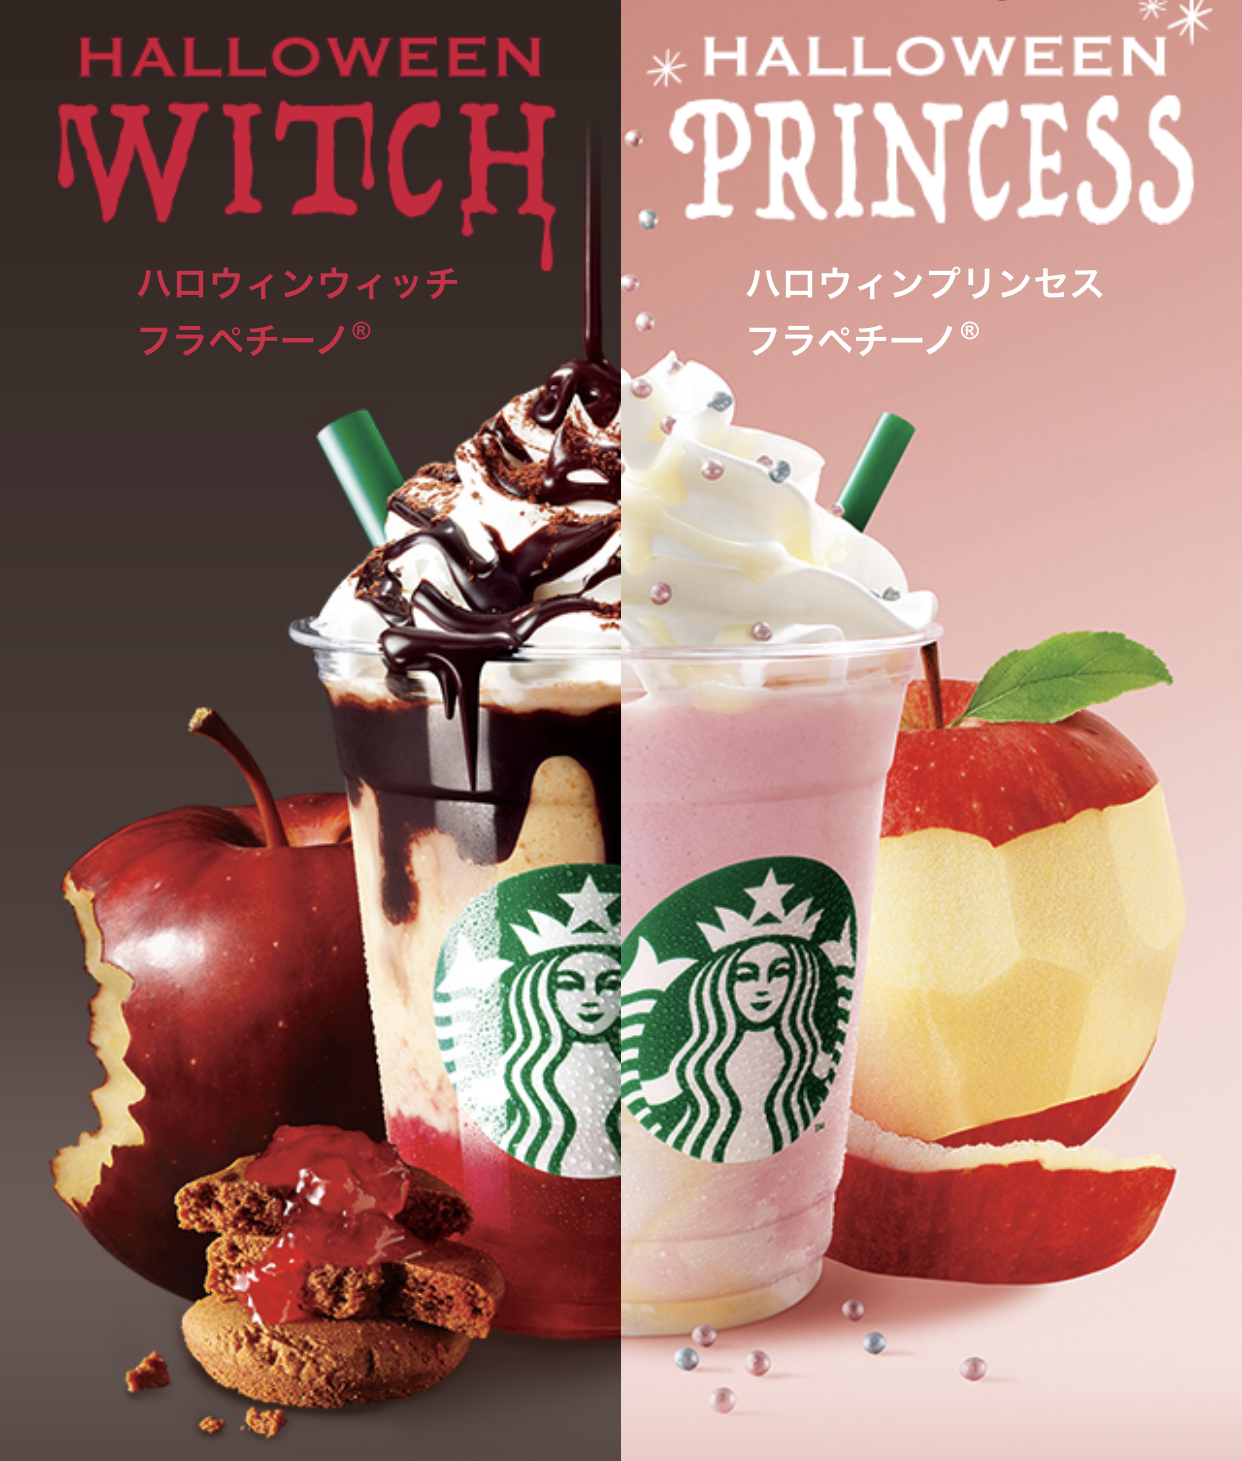 Sutabaka スタバから魔女と姫のフラペチーノが新登場 白雪姫を思わせるようなウィッチ プリンセスフラペチーノ 先行発売あり